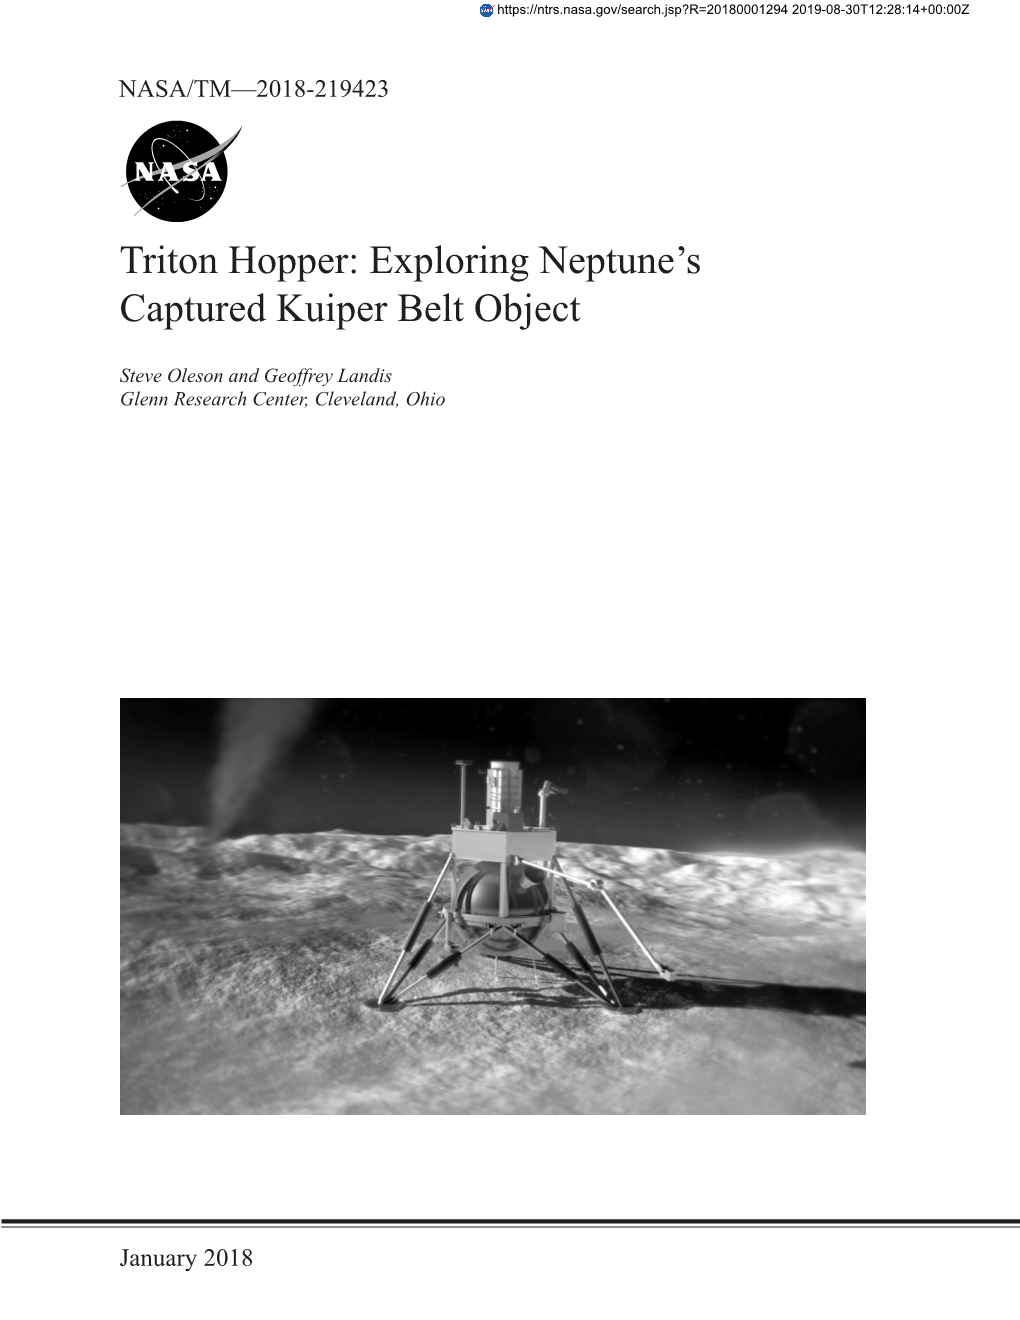 Triton Hopper: Exploring Neptune’S Captured Kuiper Belt Object